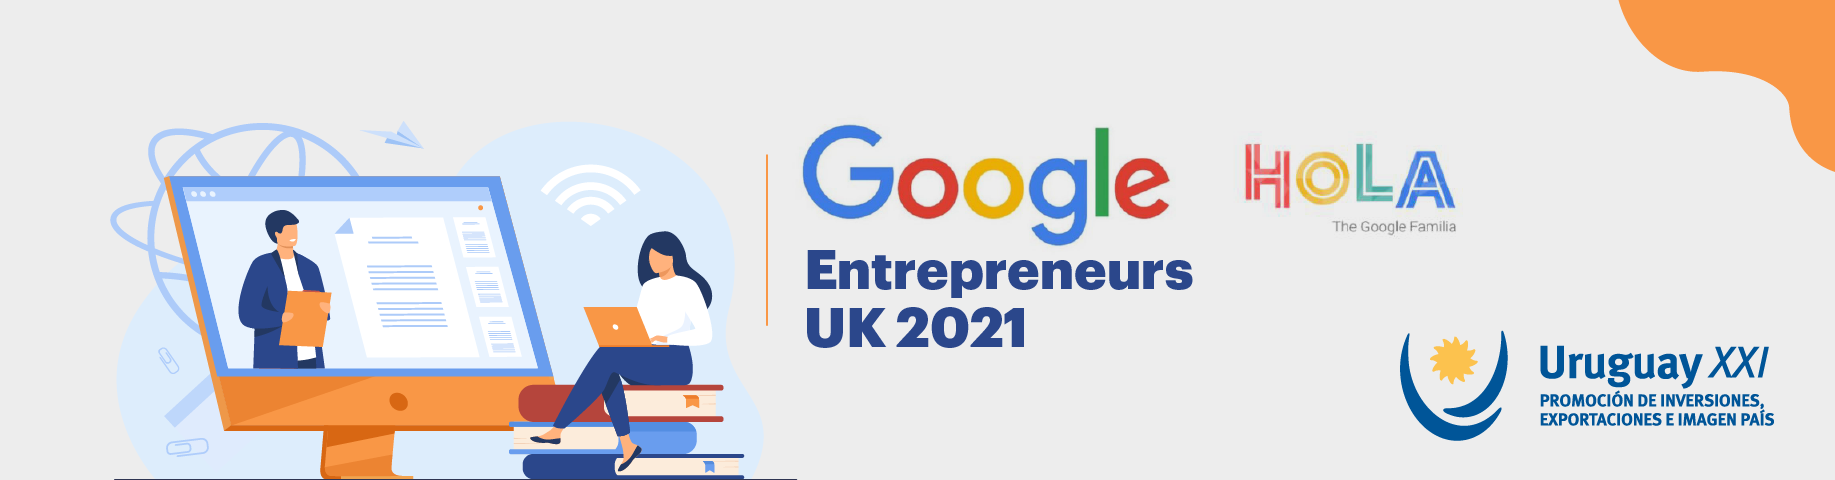 Google HOLA Entrepreneurs UK 2021 - Agenda